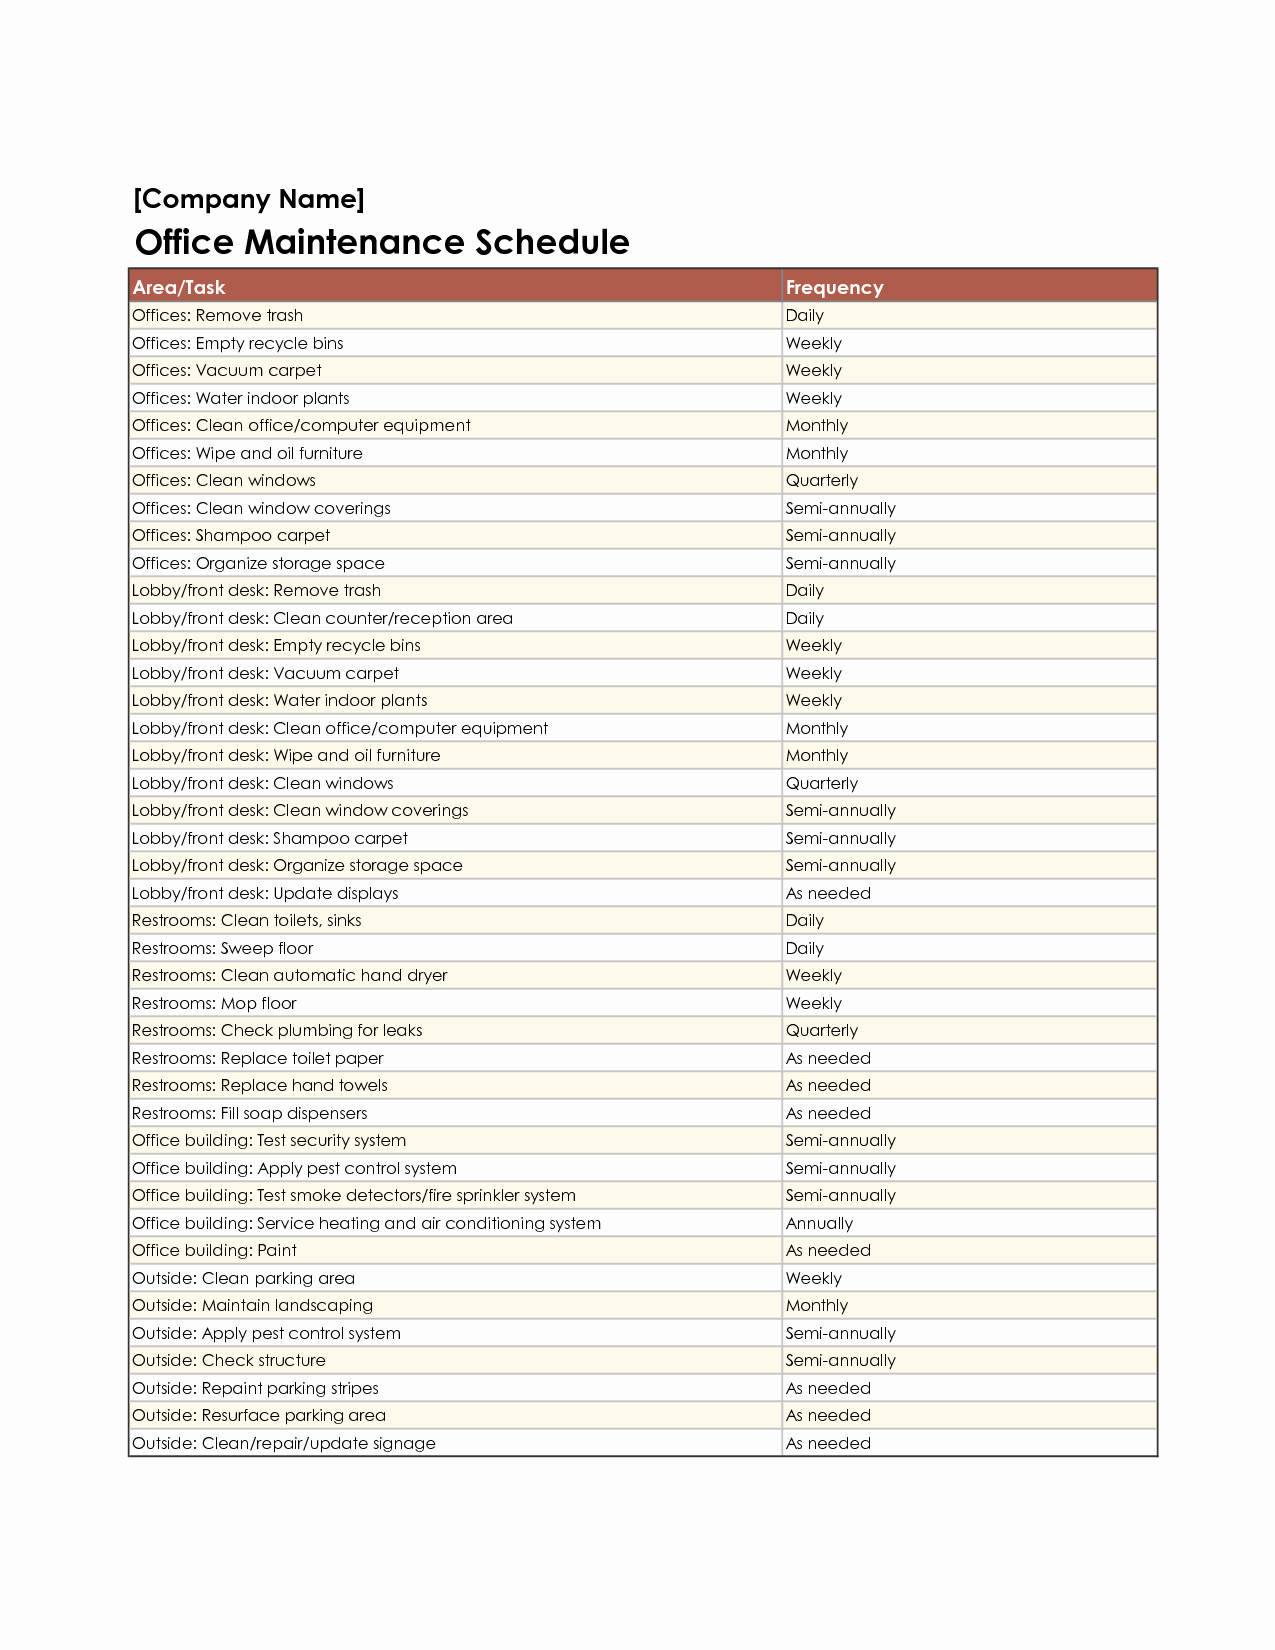 Equipment Maintenance Schedule Template Excel Elegant Equipment Maintenance Schedule Template Excel